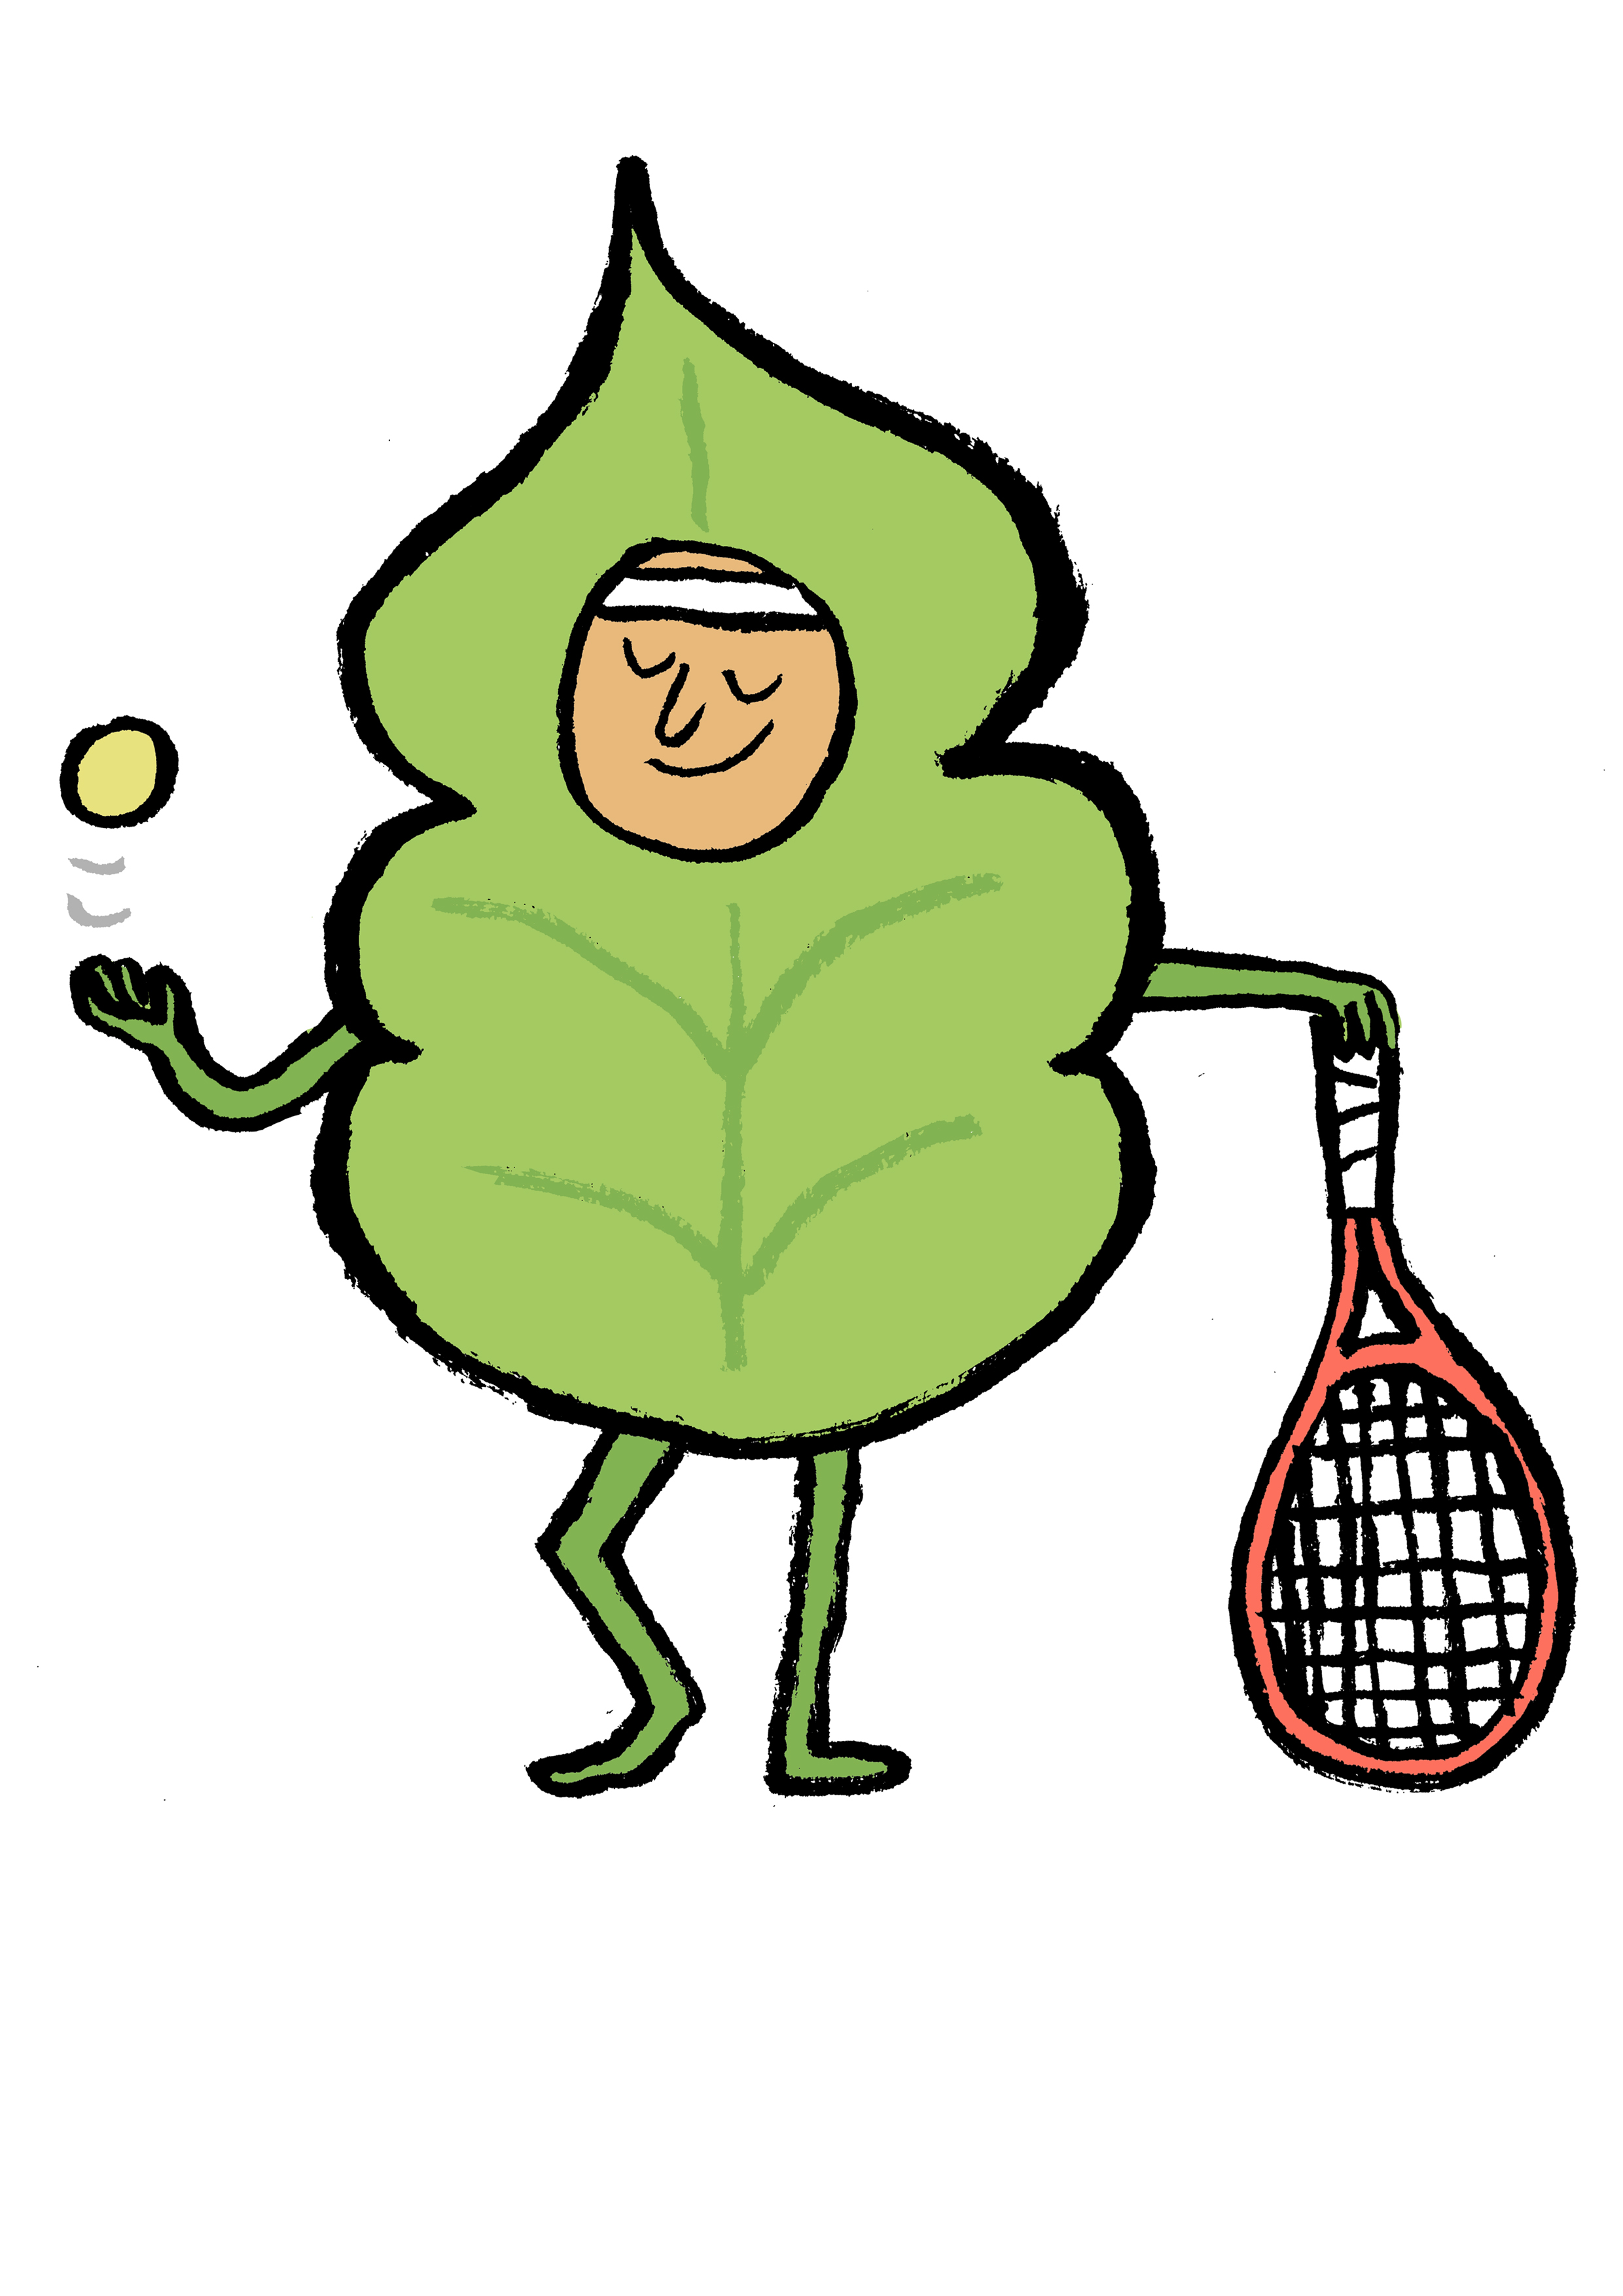 0-Wimbledon-tennis-leaf